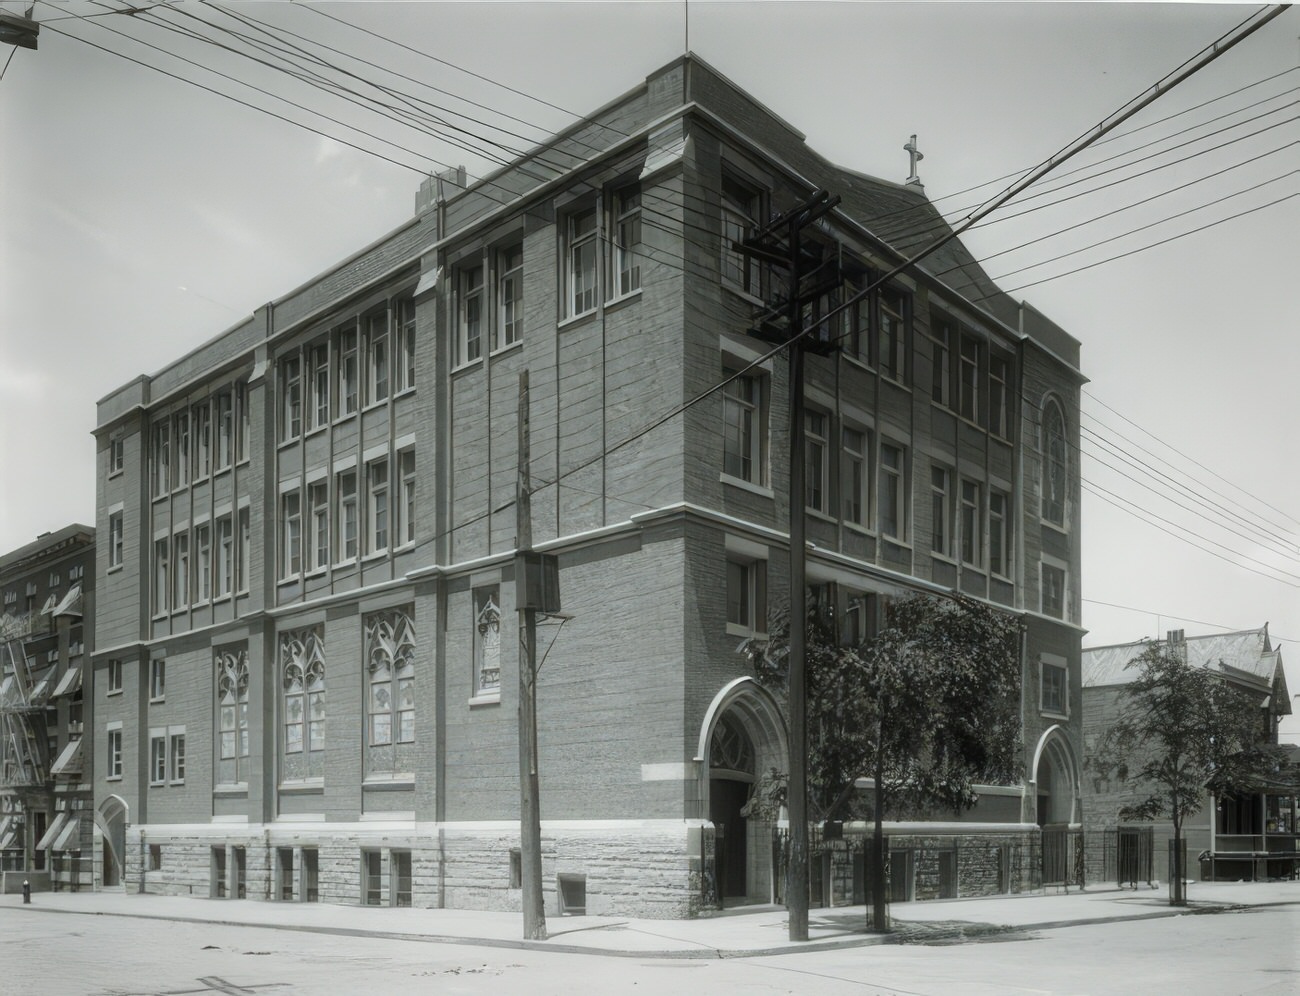 183Rd Street And Washington Avenue, Parochial School, Circa 1915.